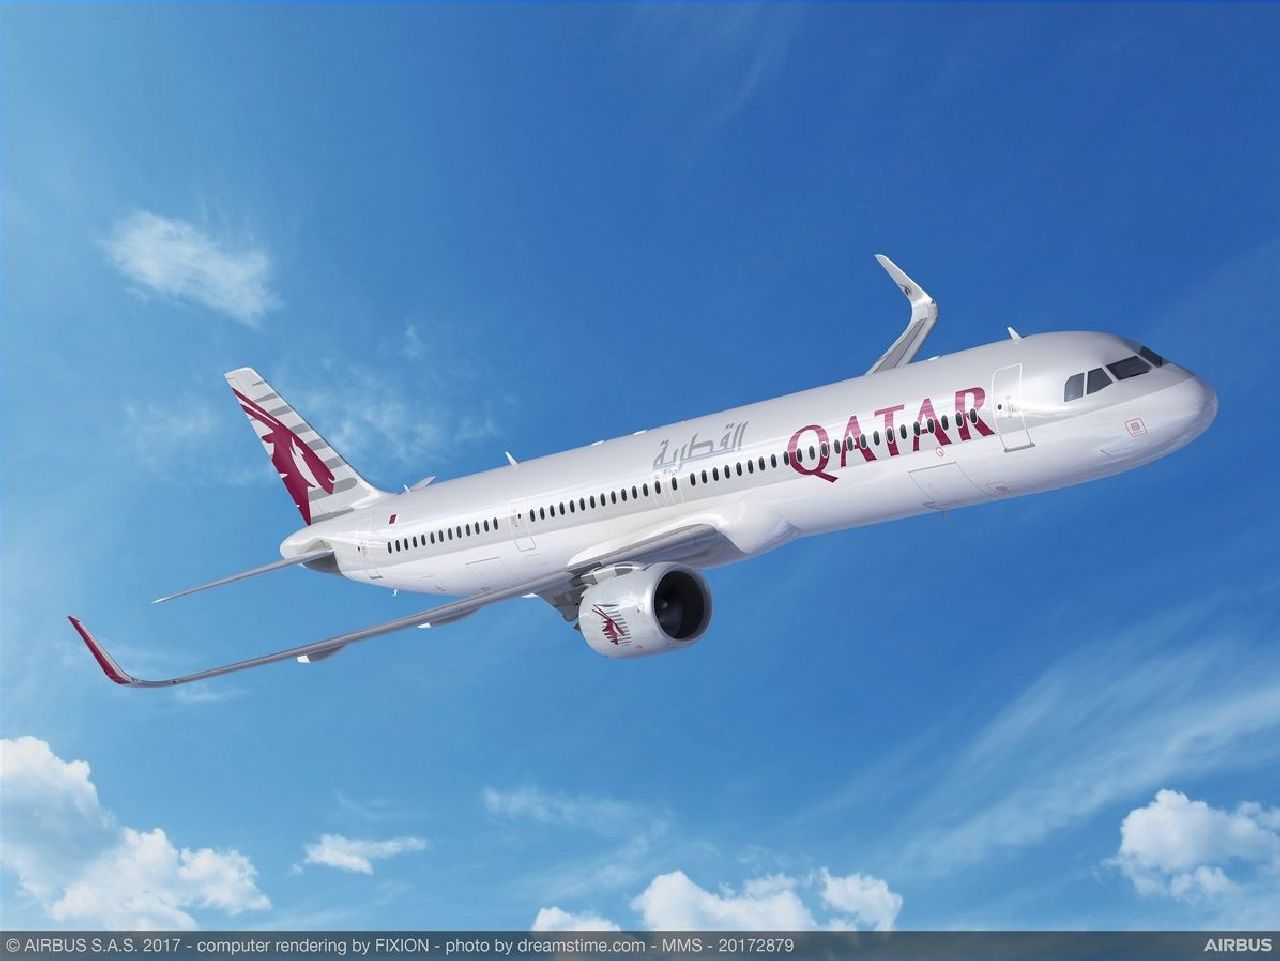 Vizualizace A321neo pro Qatar Airways. Foto: Airbus